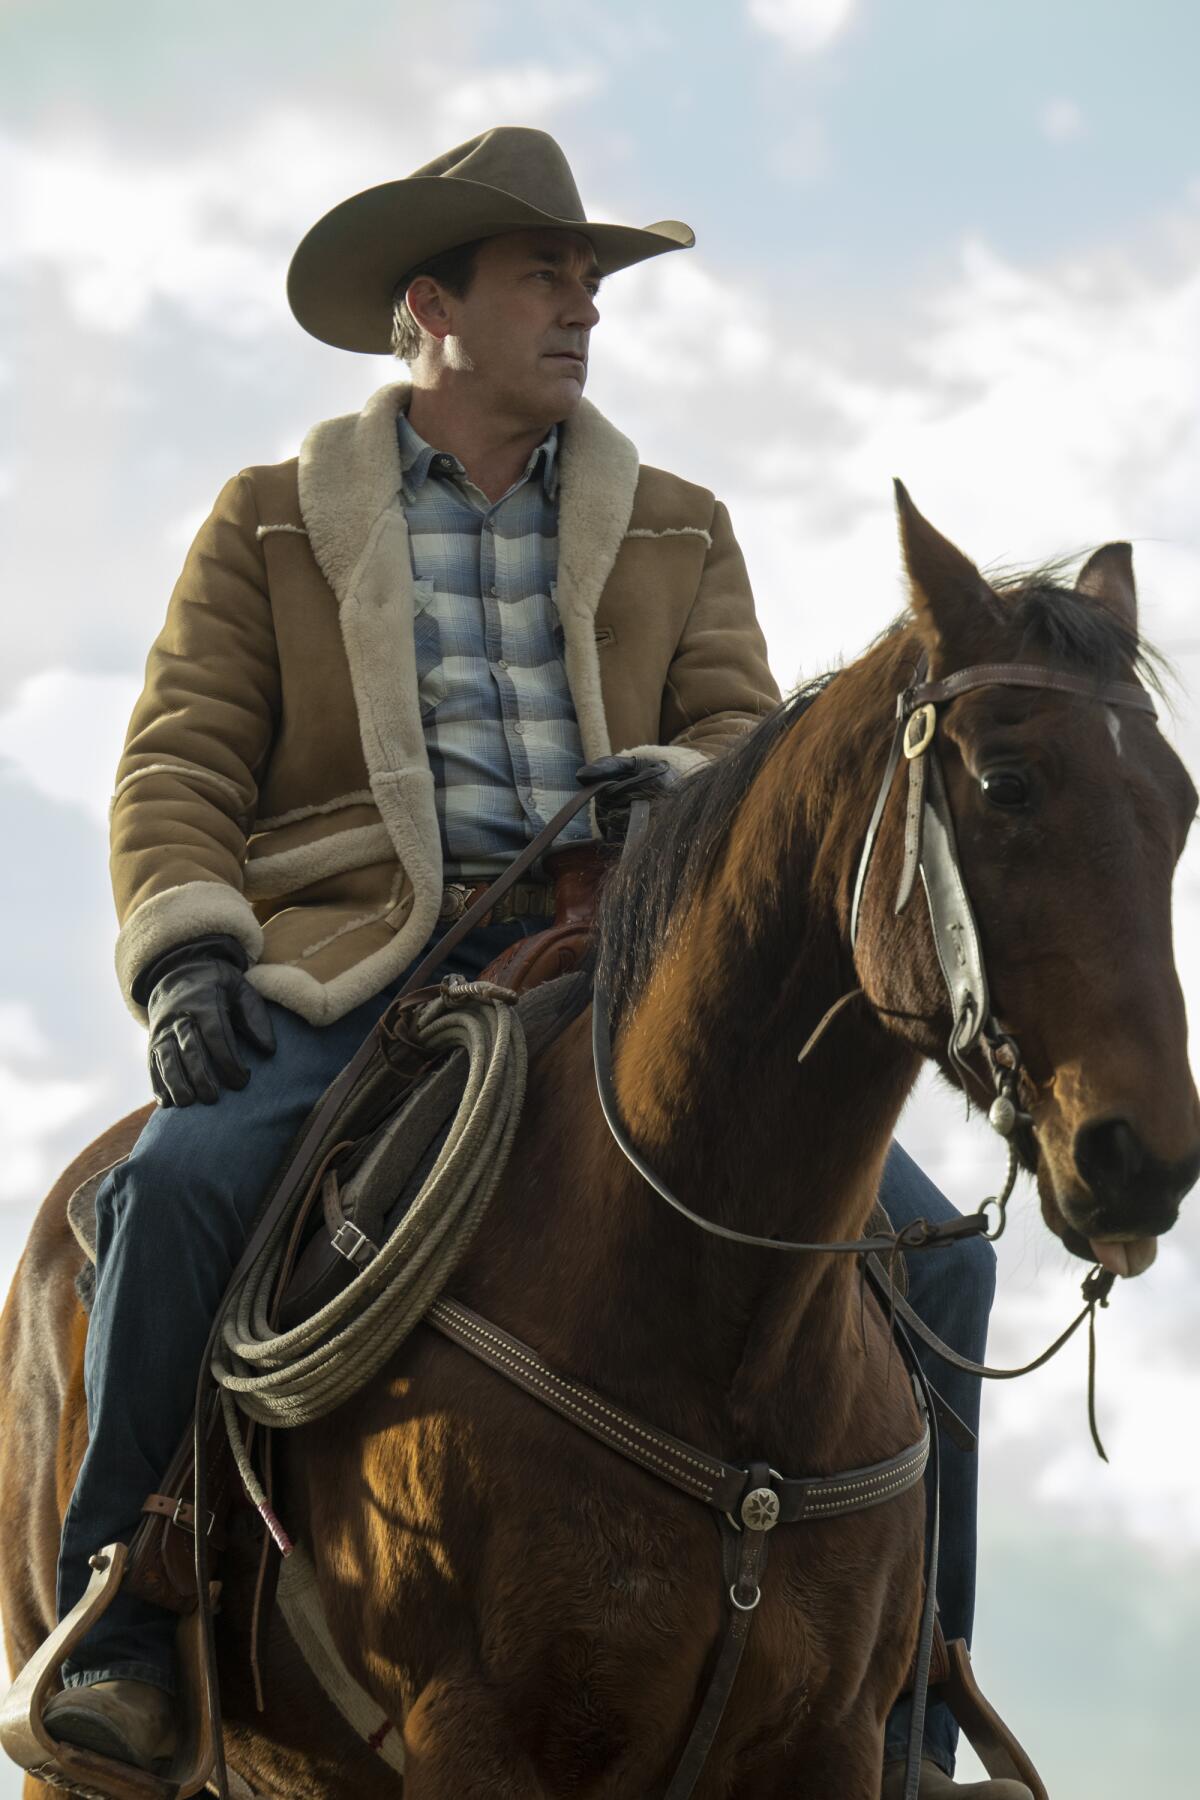 A man in a cowboy hat rides a horse in "Fargo" Season 5.